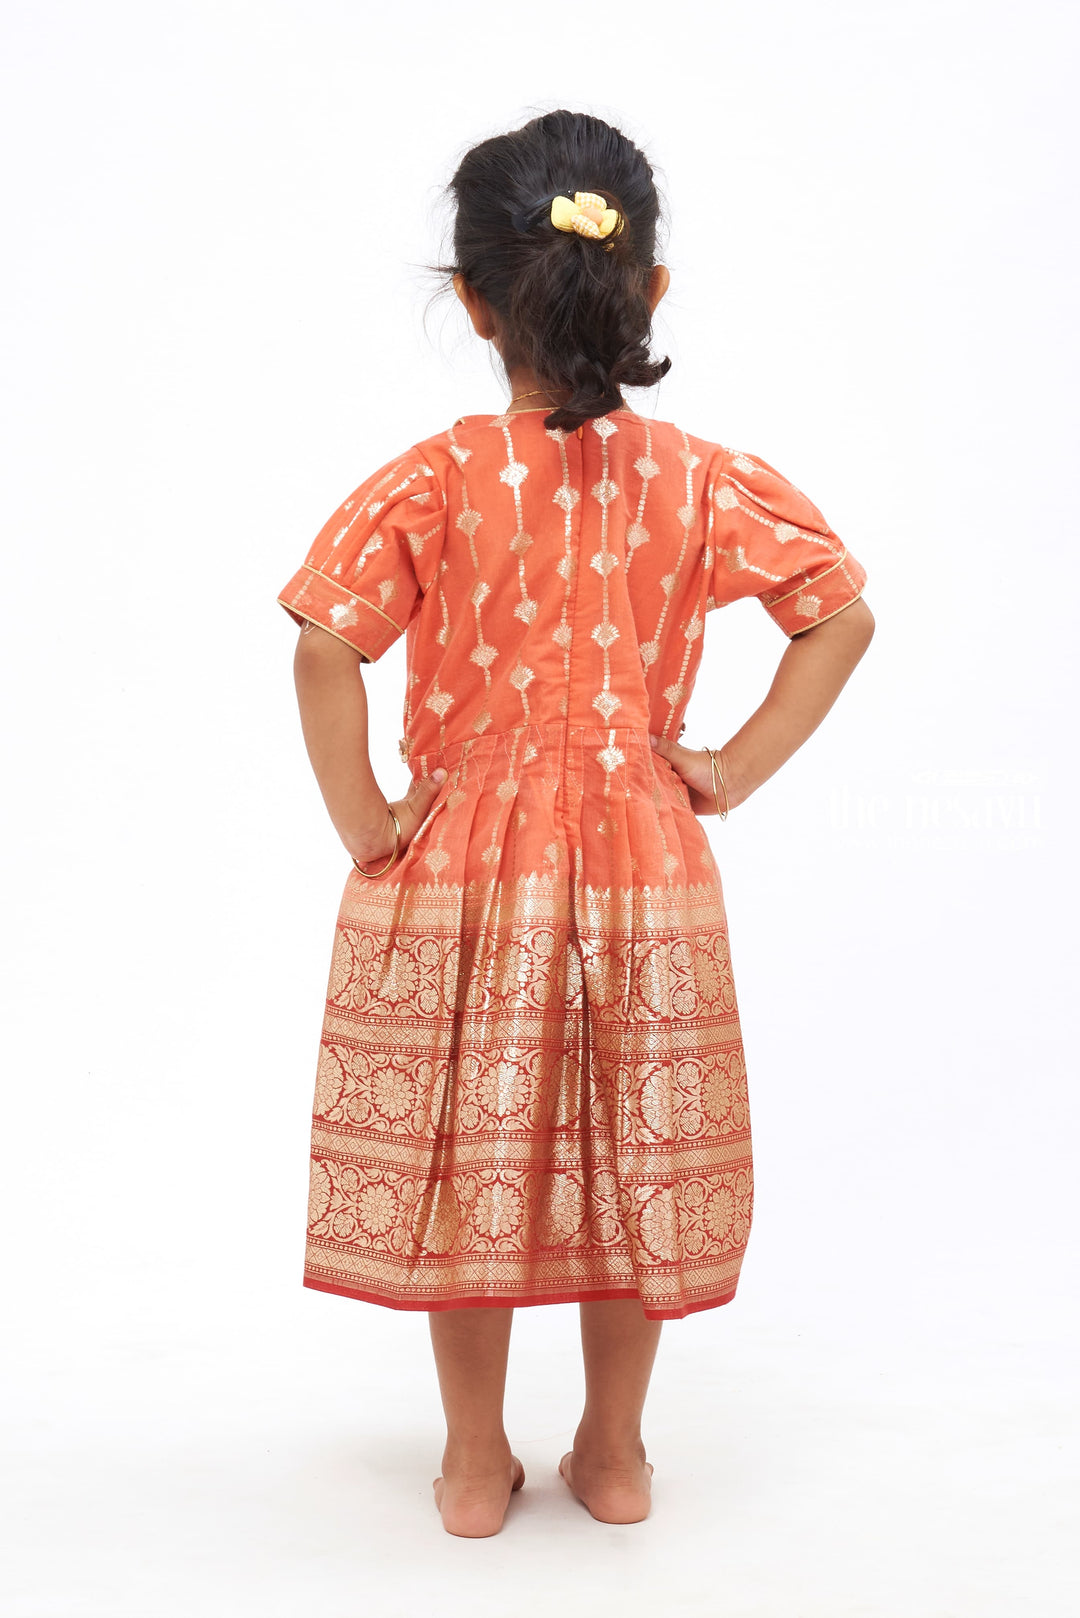 The Nesavu Silk Frock Majestic Salmon Radiance: Zari Embroidered Banarasi Border Silk Frock for Girls Nesavu Pure Silk Children's Festive Outfit | Rich Silk Attire for Special Events | The Nesavu